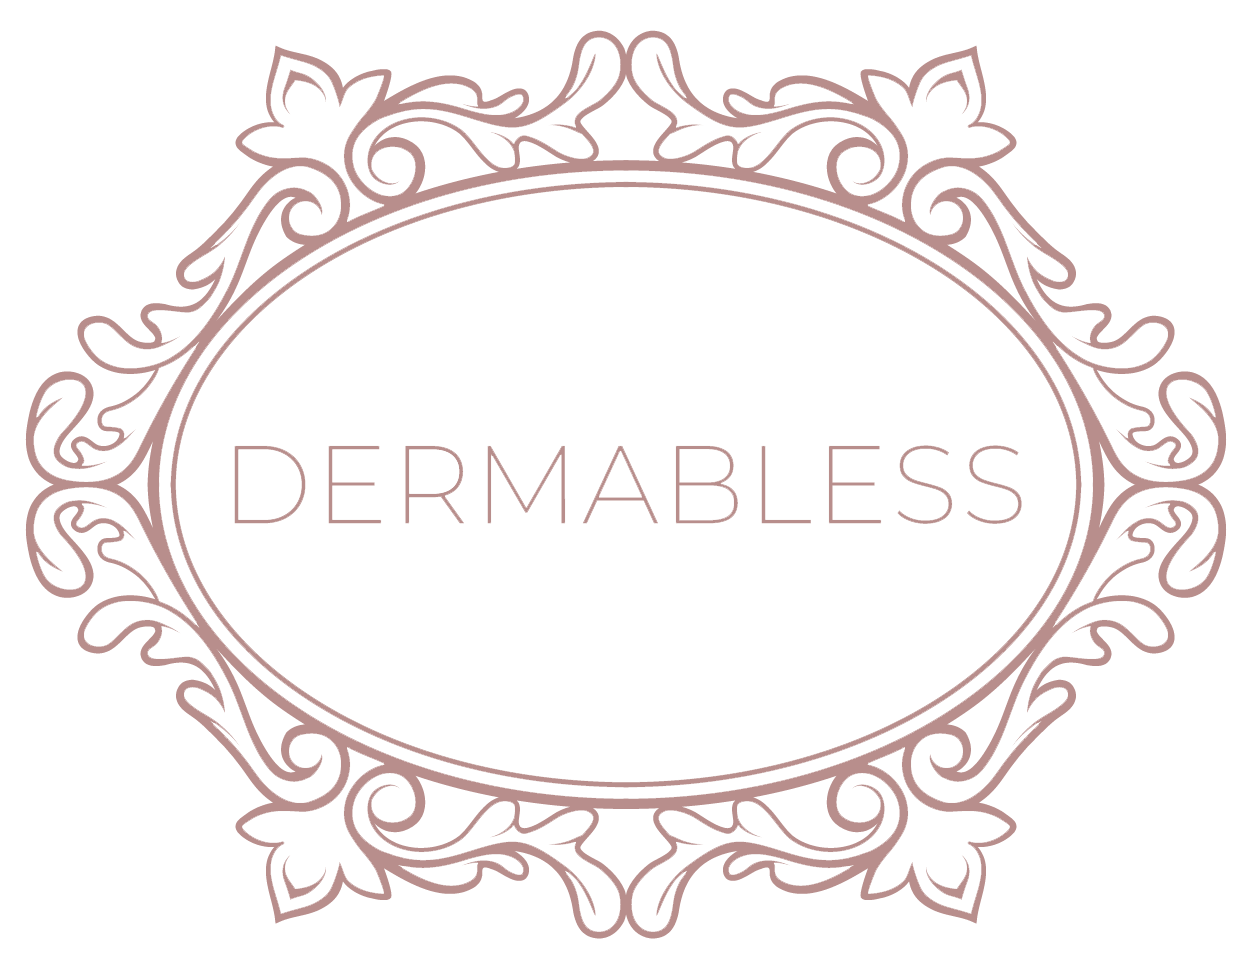 Dermabless Logo